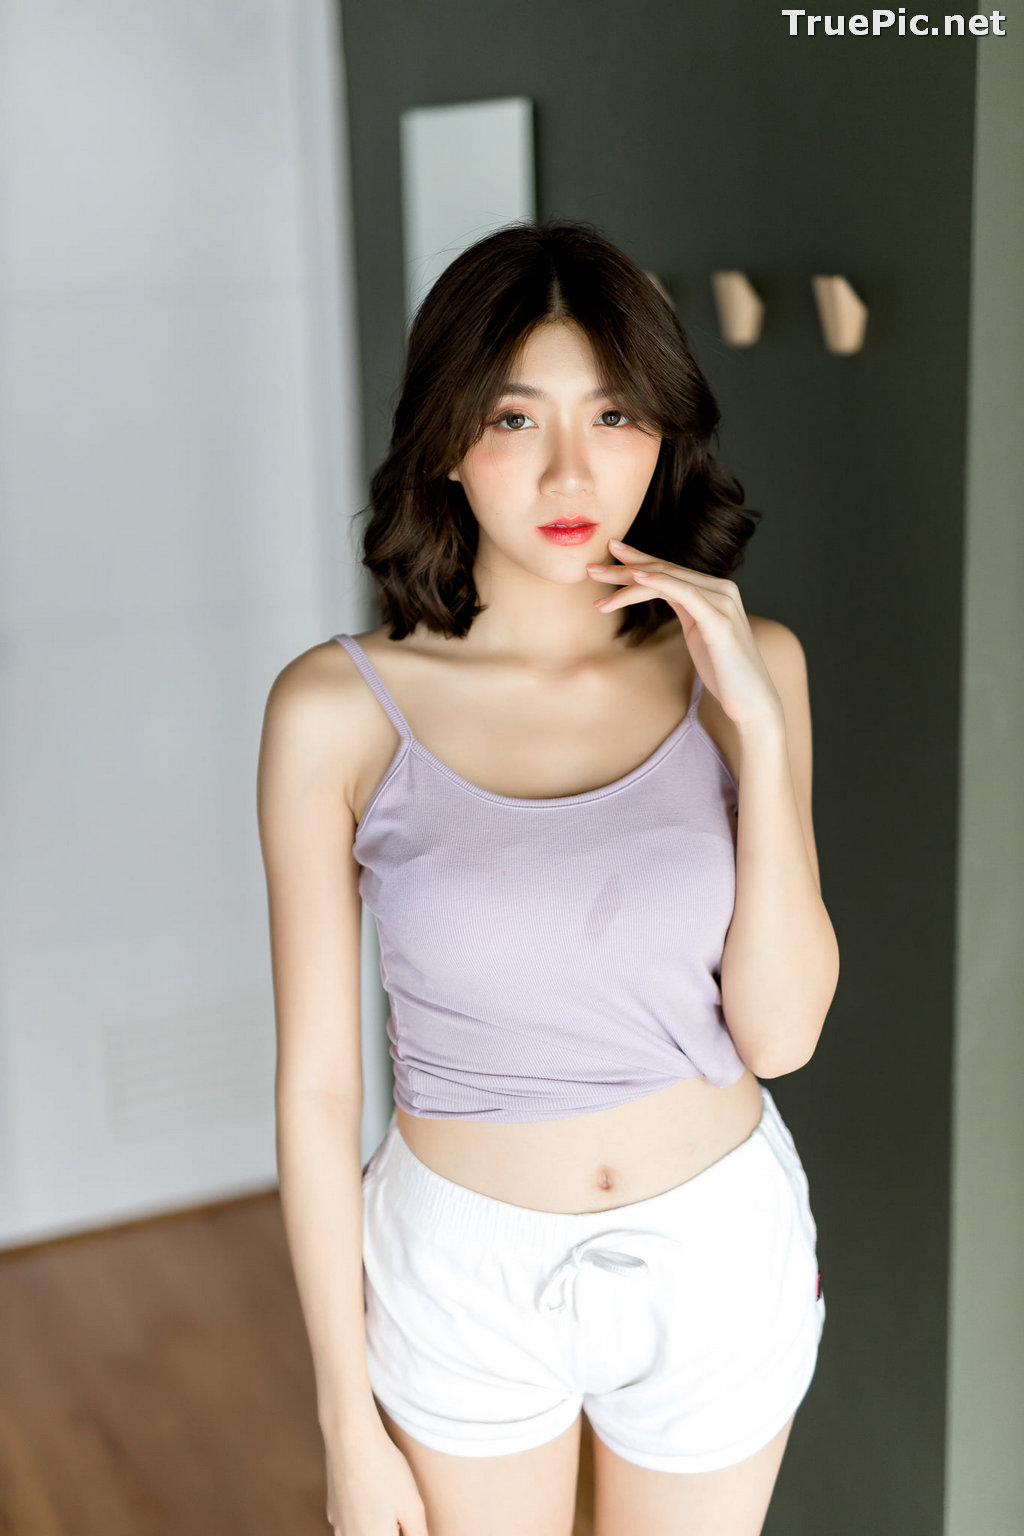 Image Thailand Model - Sasi Ngiunwan - Beautiful Girl Woke Up - TruePic.net - Picture-20